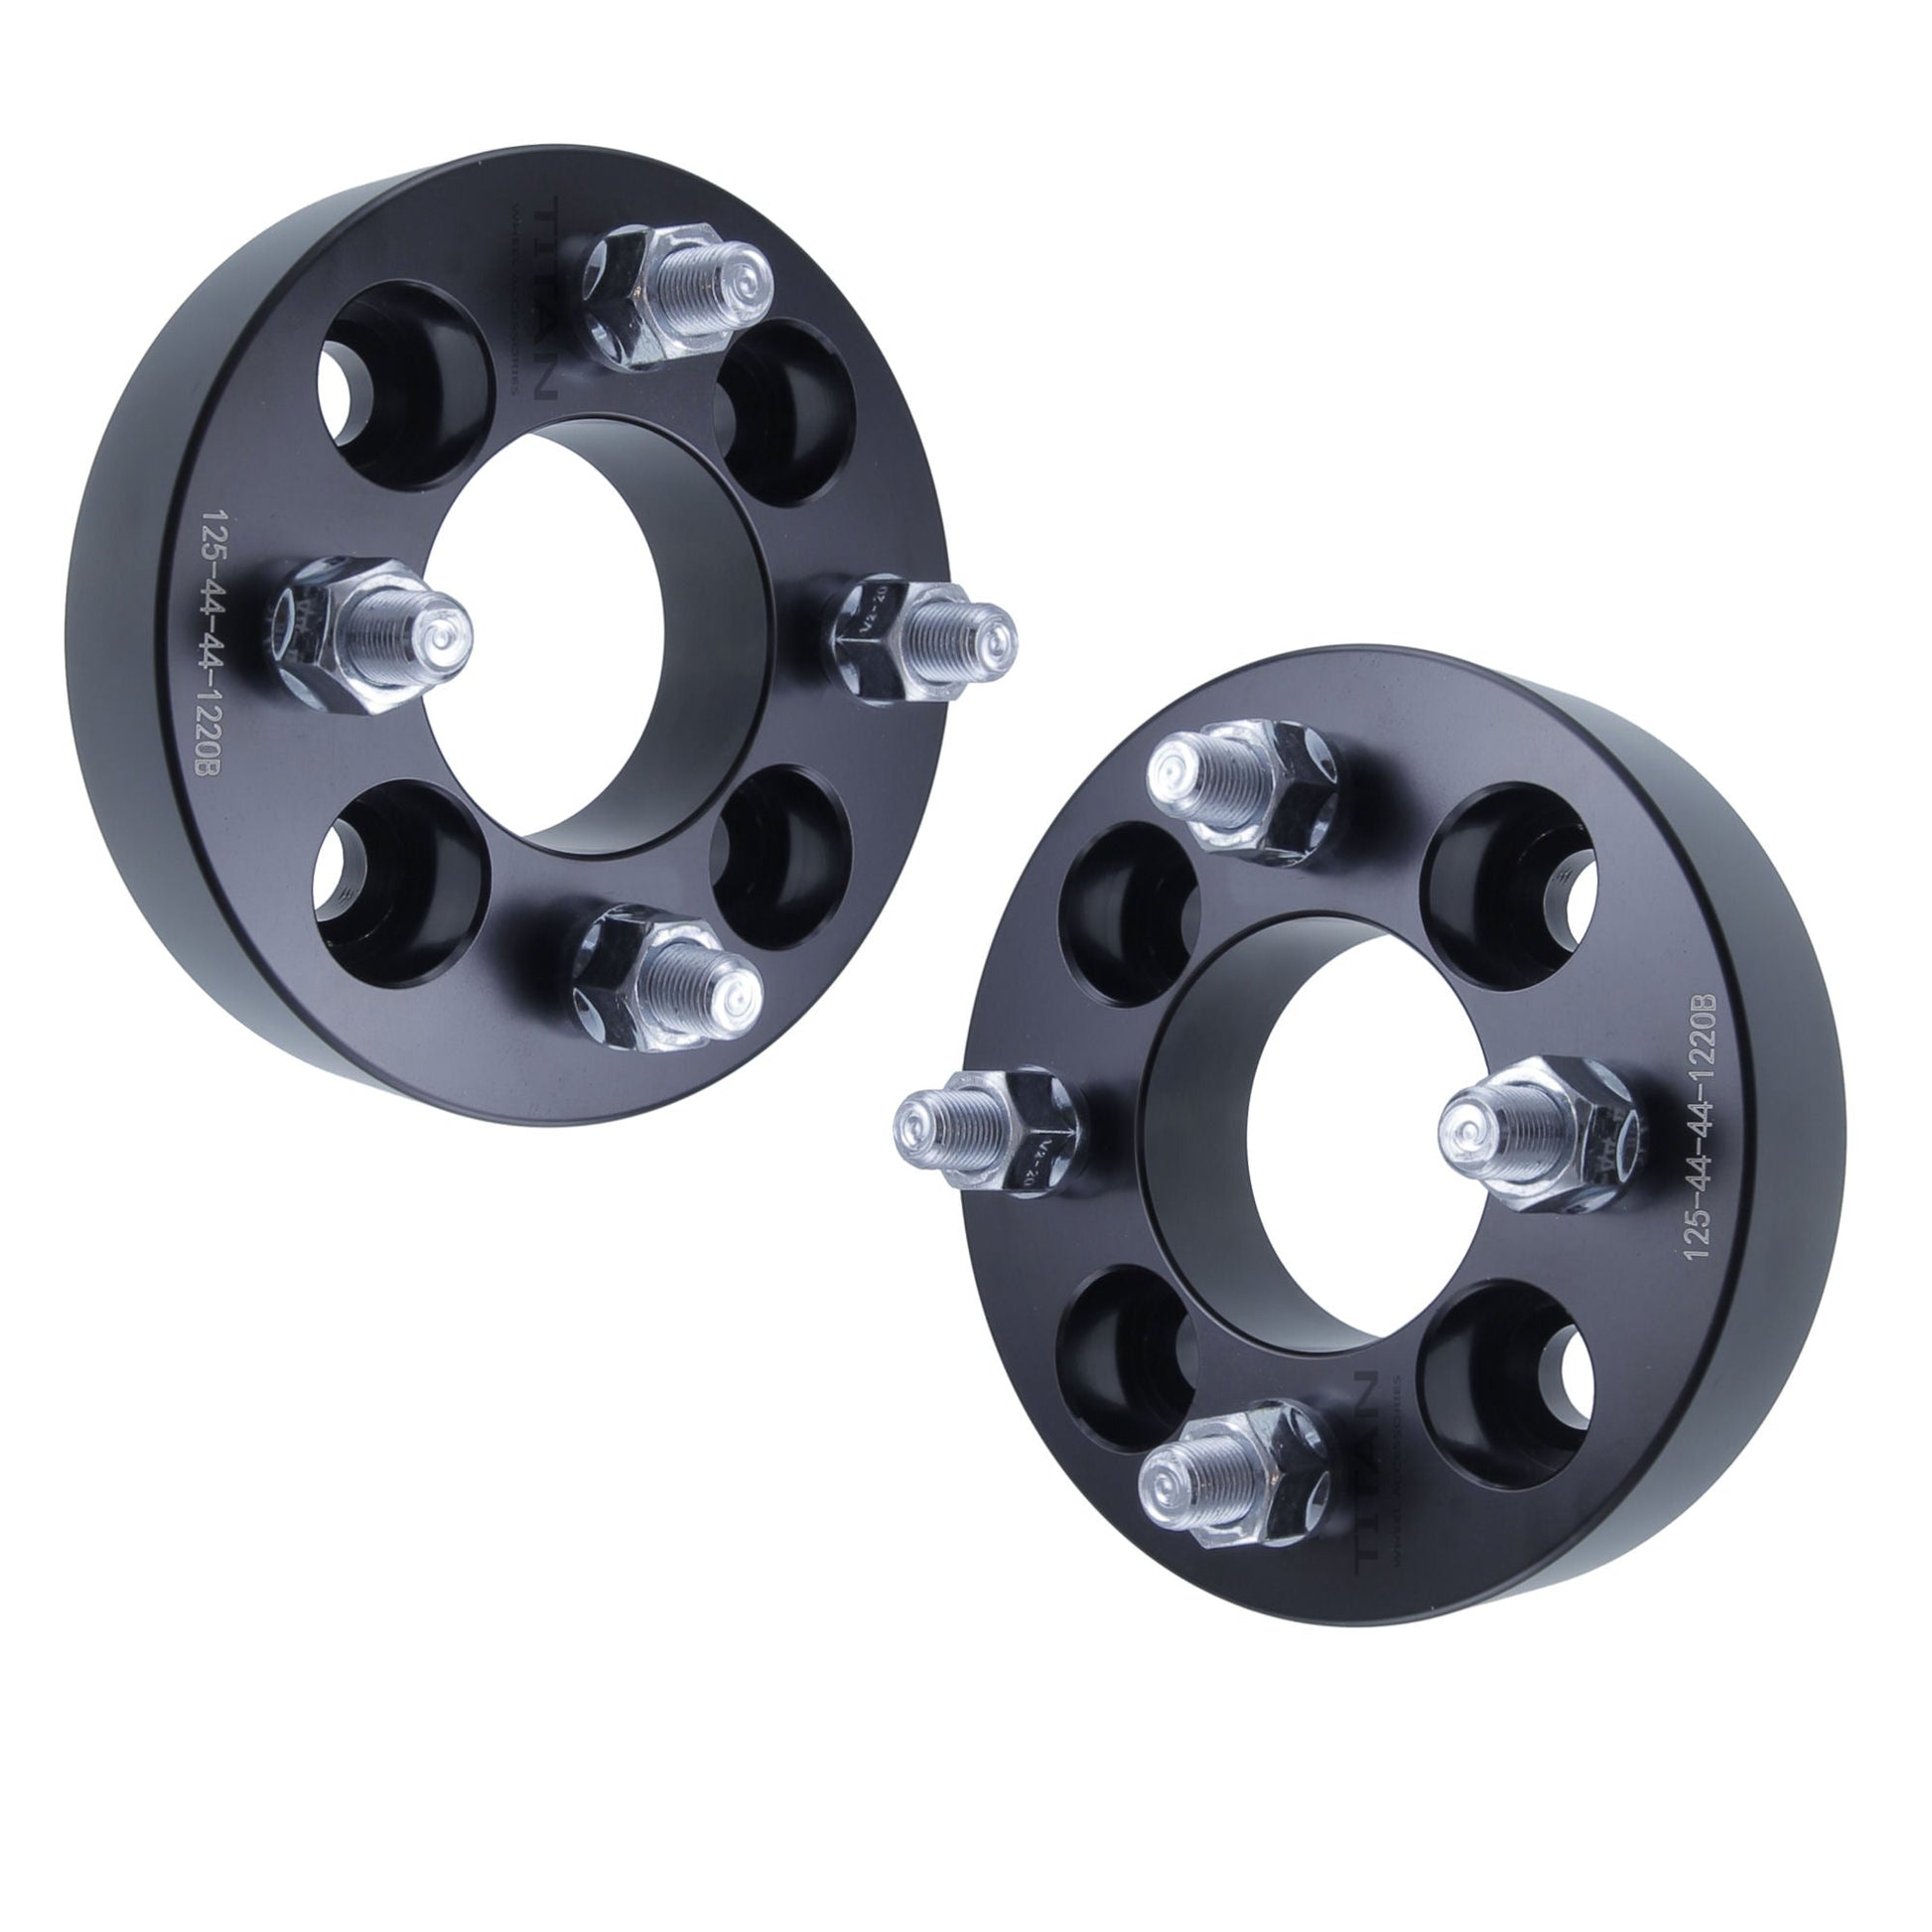 25mm (1") Titan Wheel Spacers for Honda Civic Acura Integra Mazda Protégé Miata Toyota MR2 | 4x100 | 12x1.5 Studs | Set of 4 | Titan Wheel Accessories